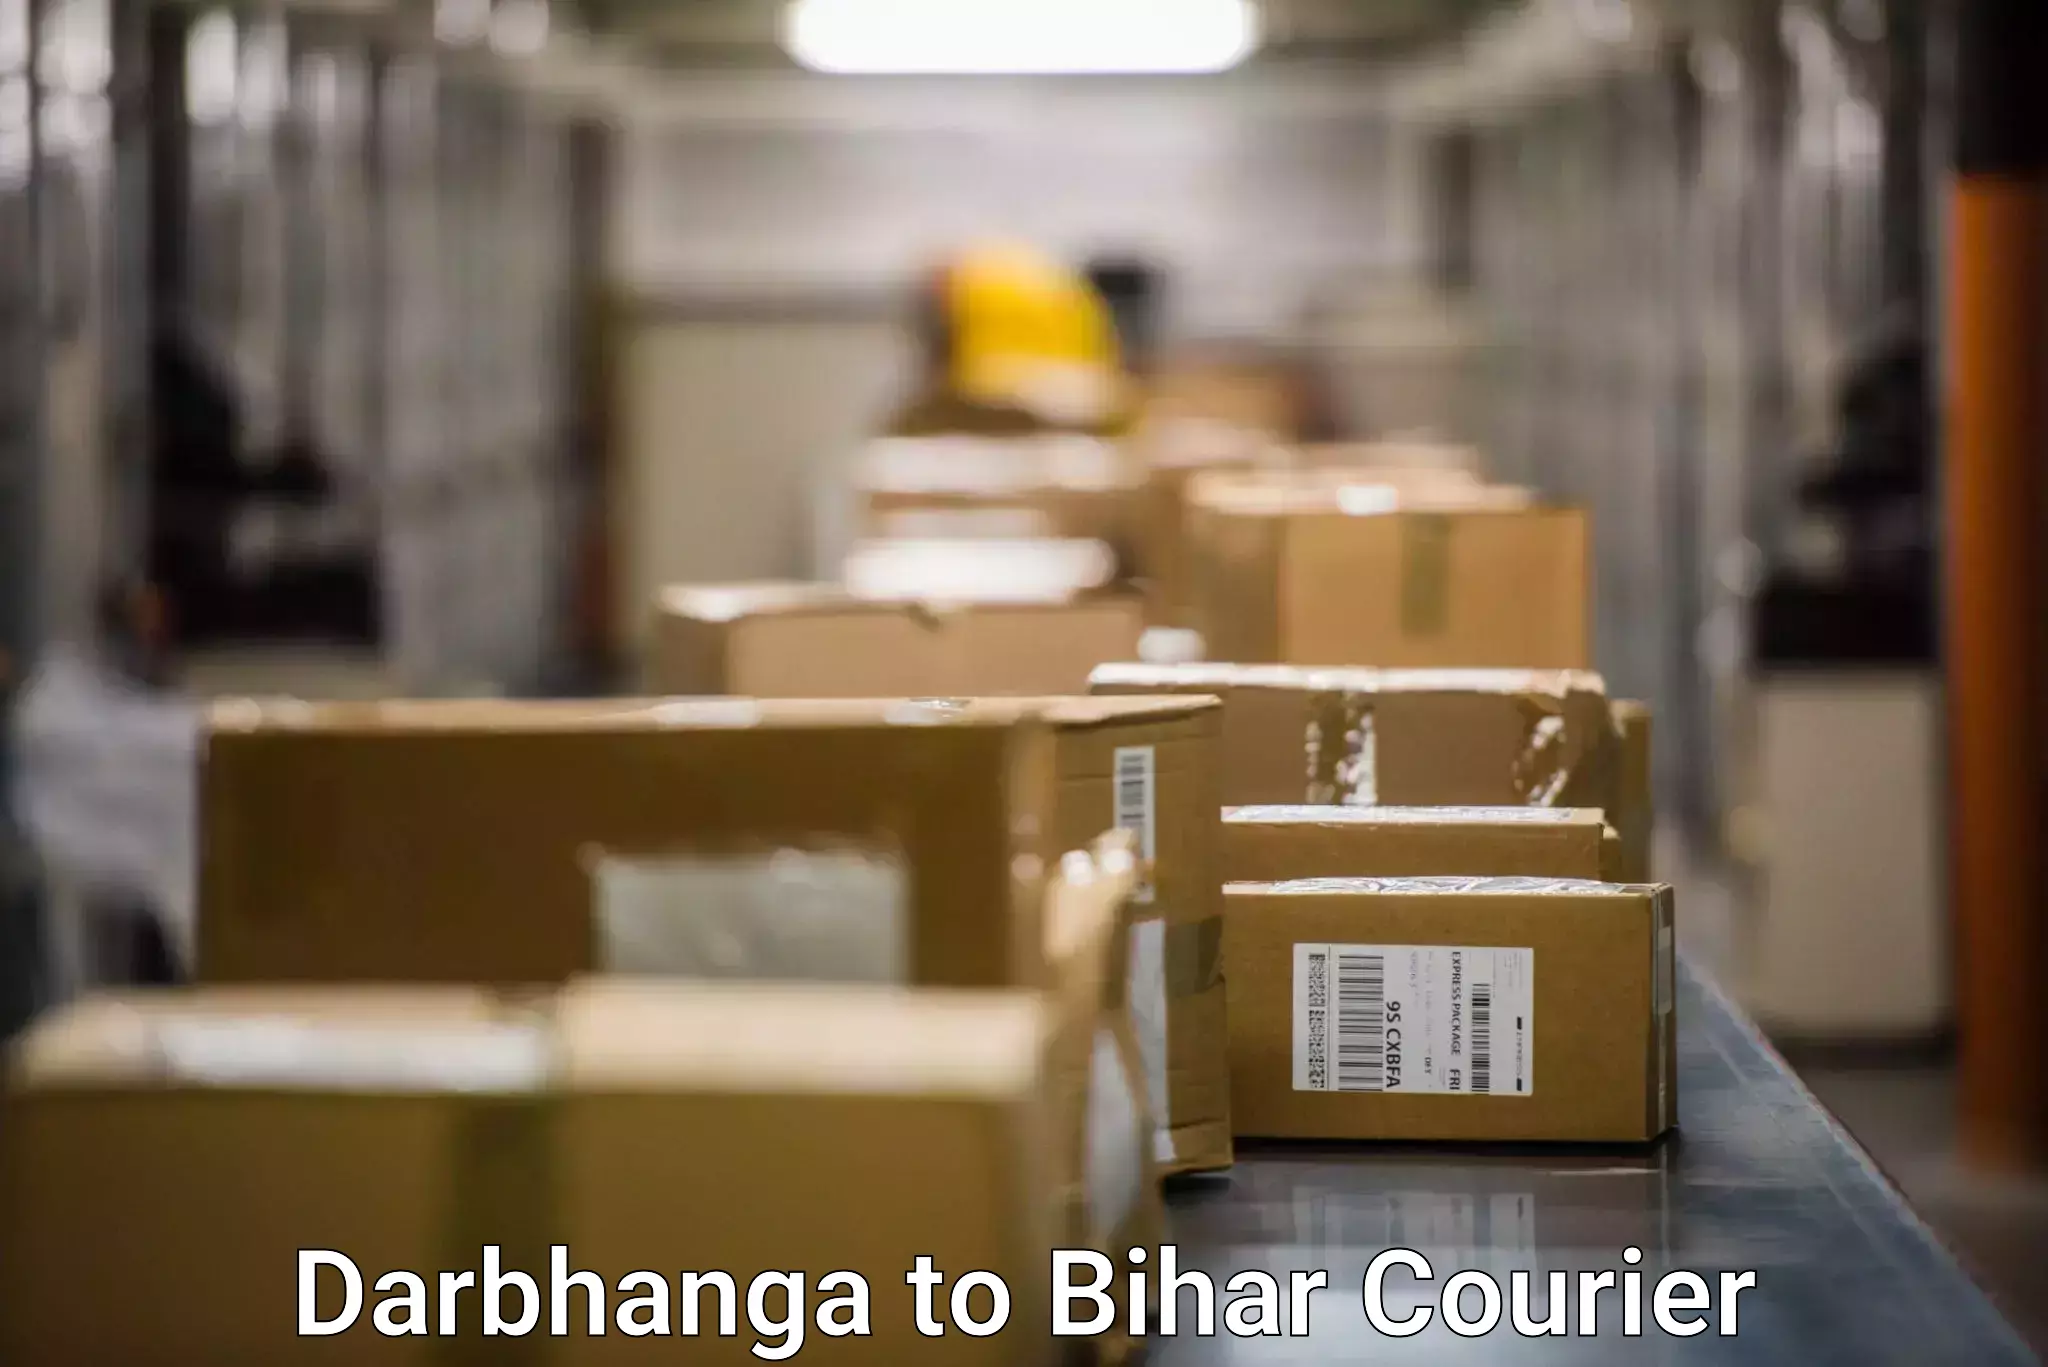 Digital courier platforms Darbhanga to Katihar